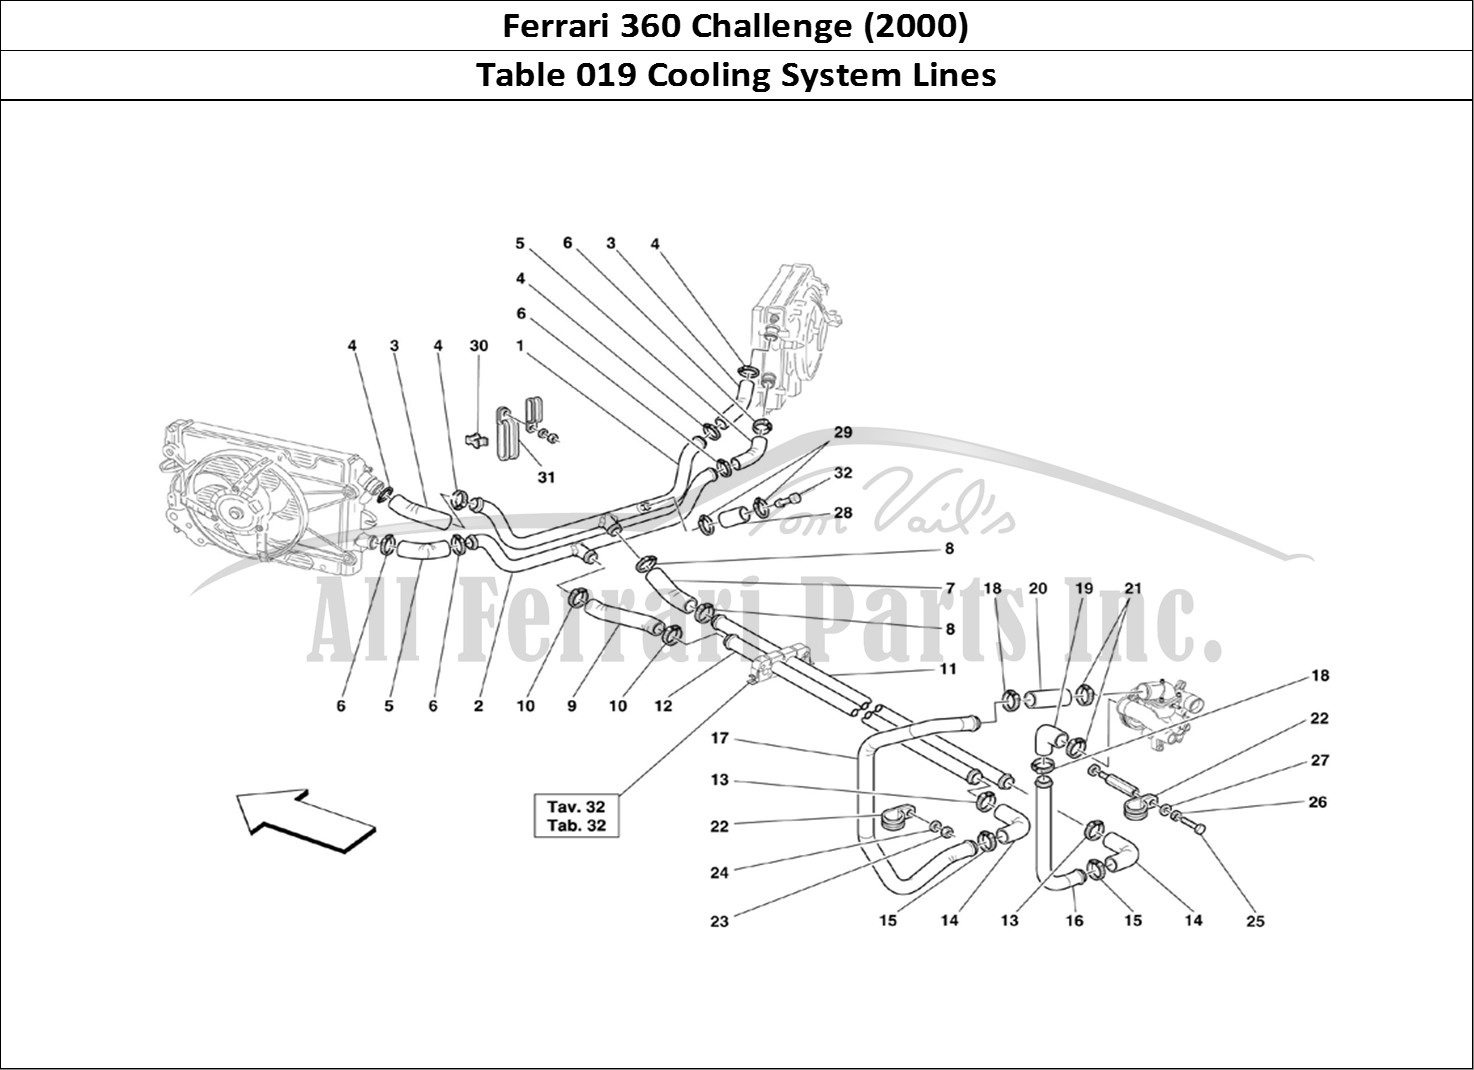 Ferrari Parts Ferrari 360 Challenge (2000) Page 019 Cooling System